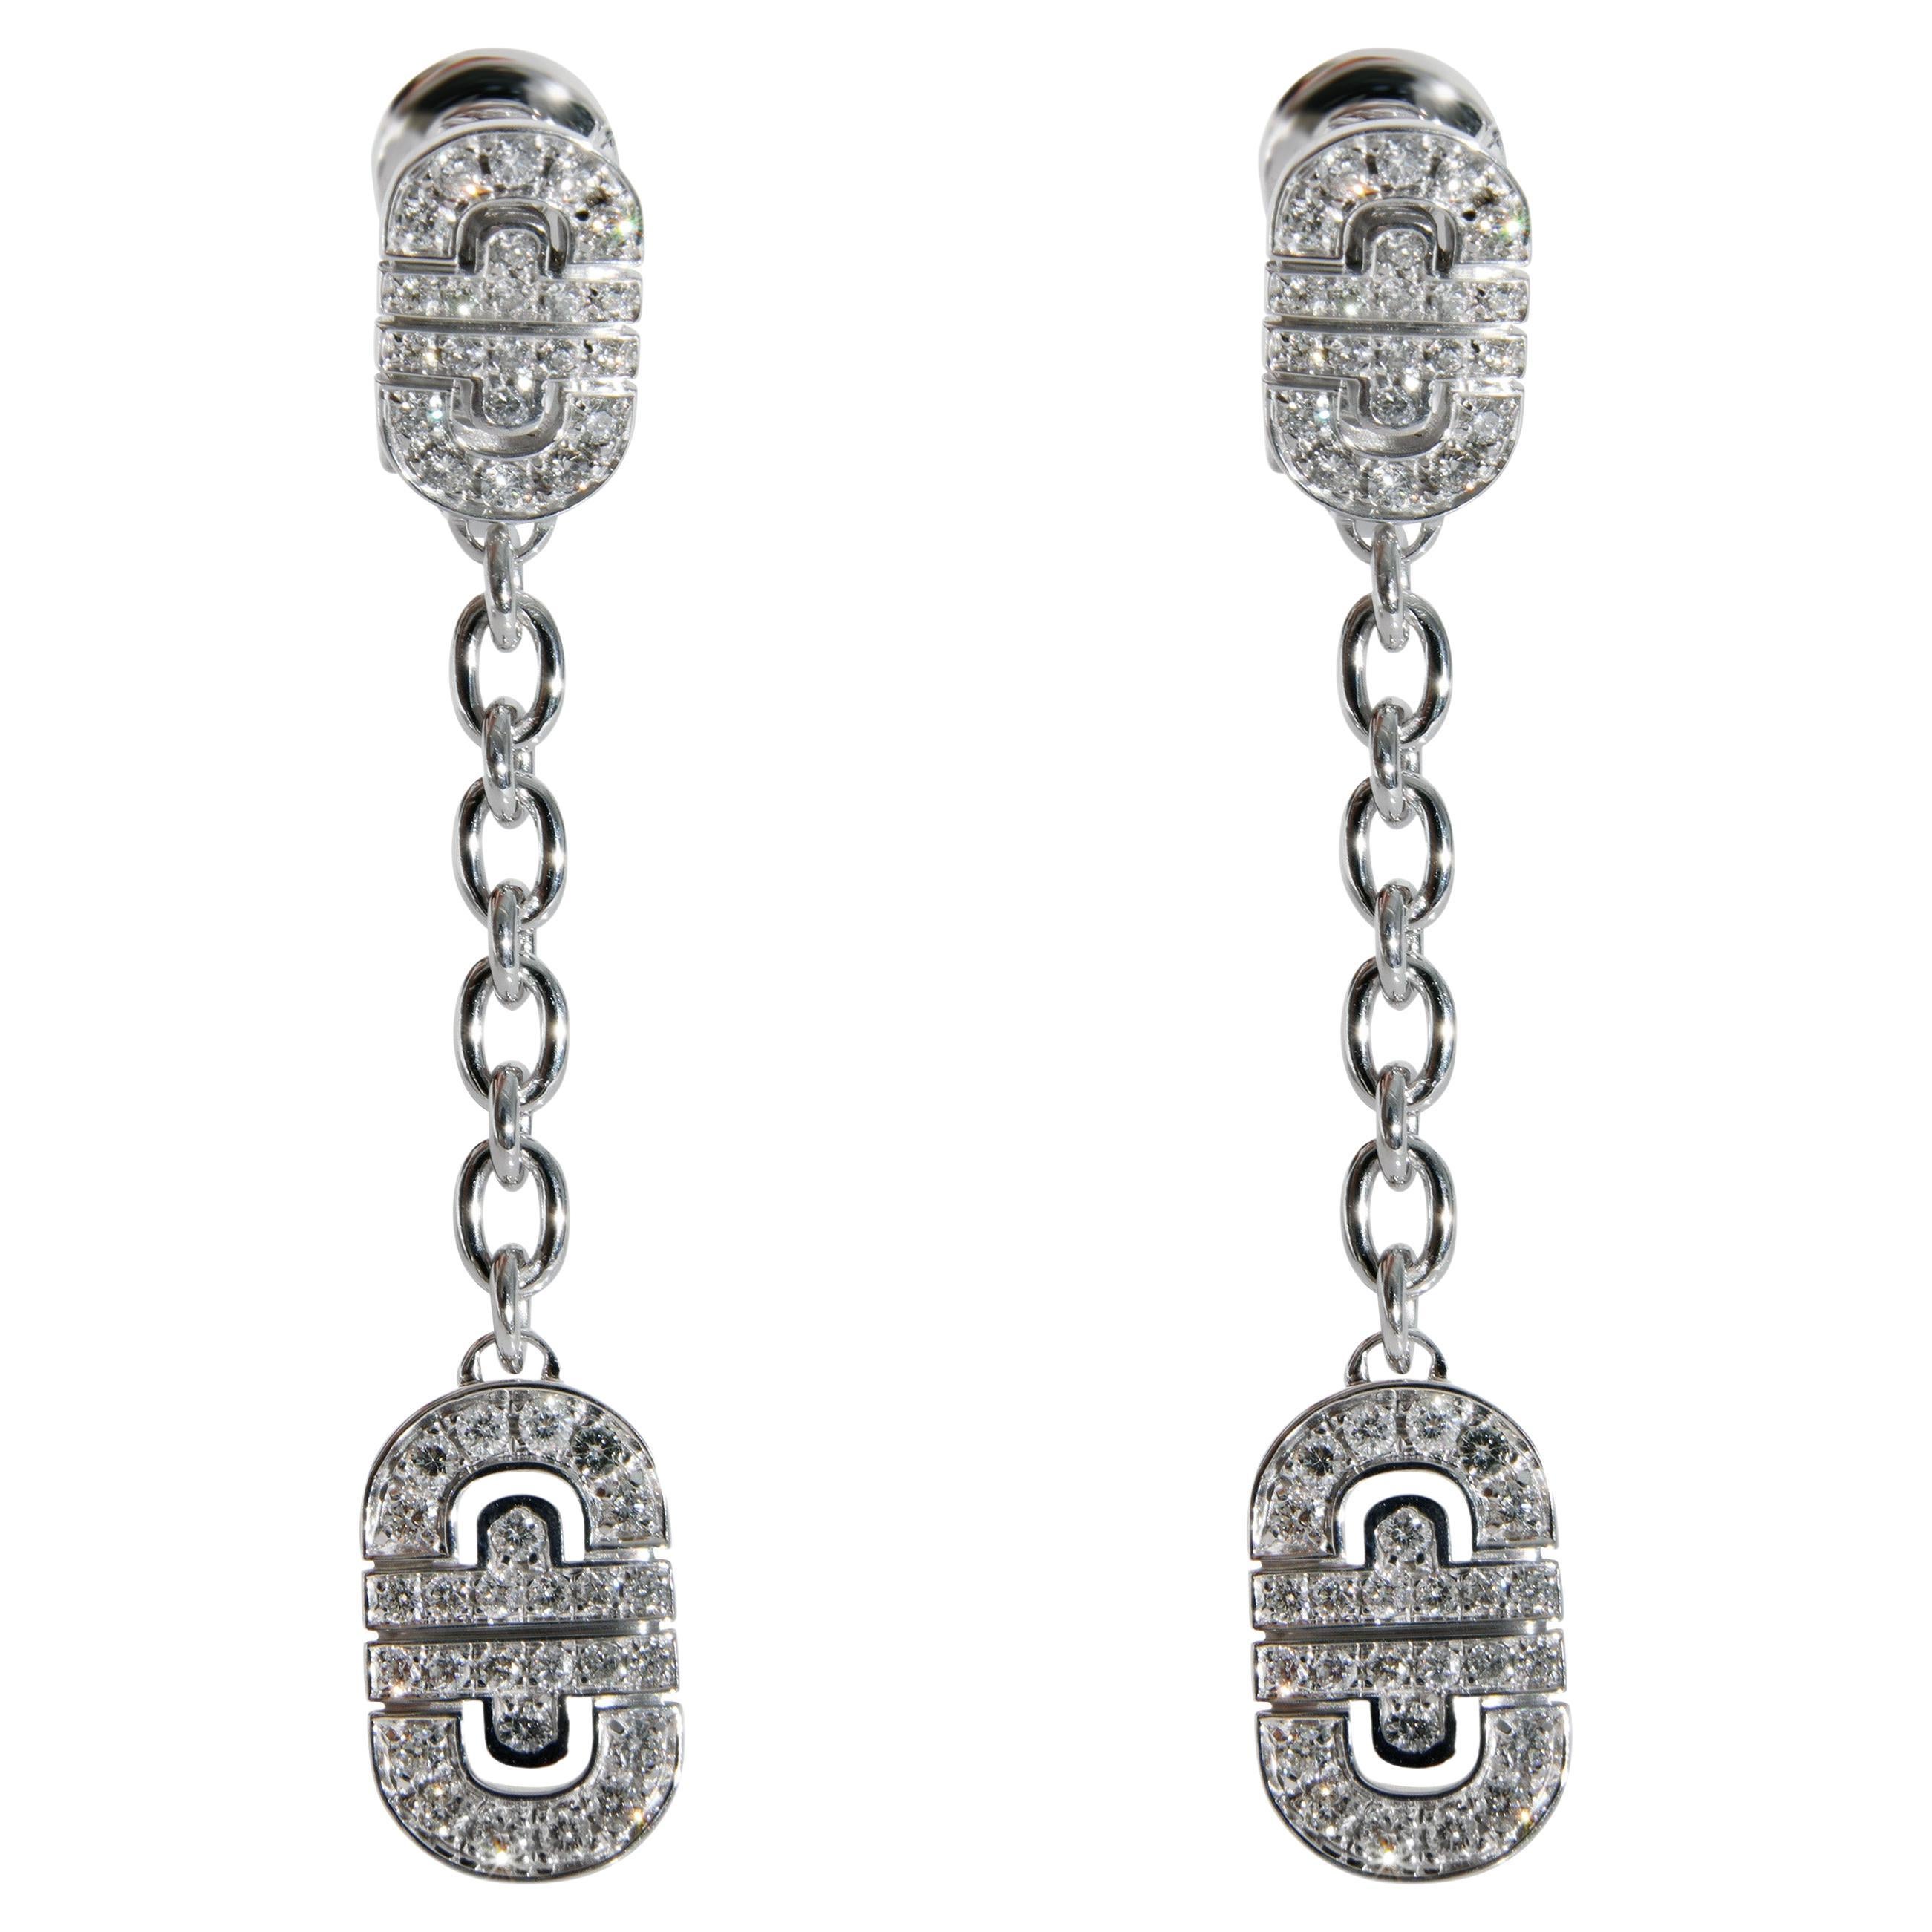 BVLGARI Parentesi Diamond Earrings in 18k White Gold 1.15 CTW